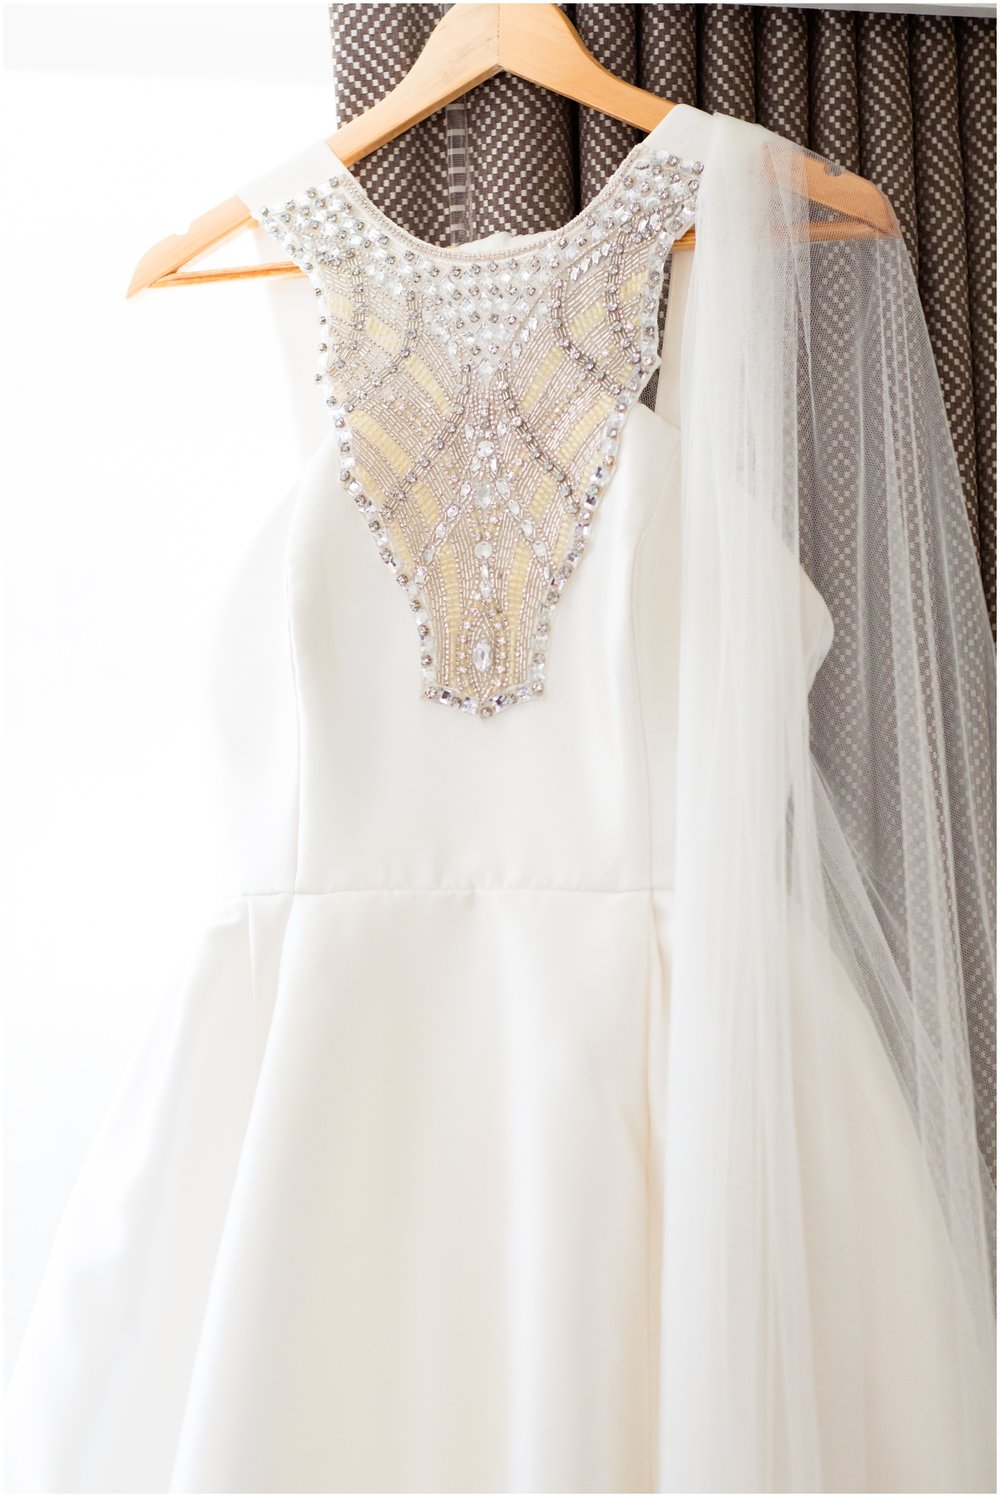  bride’s wedding dress 